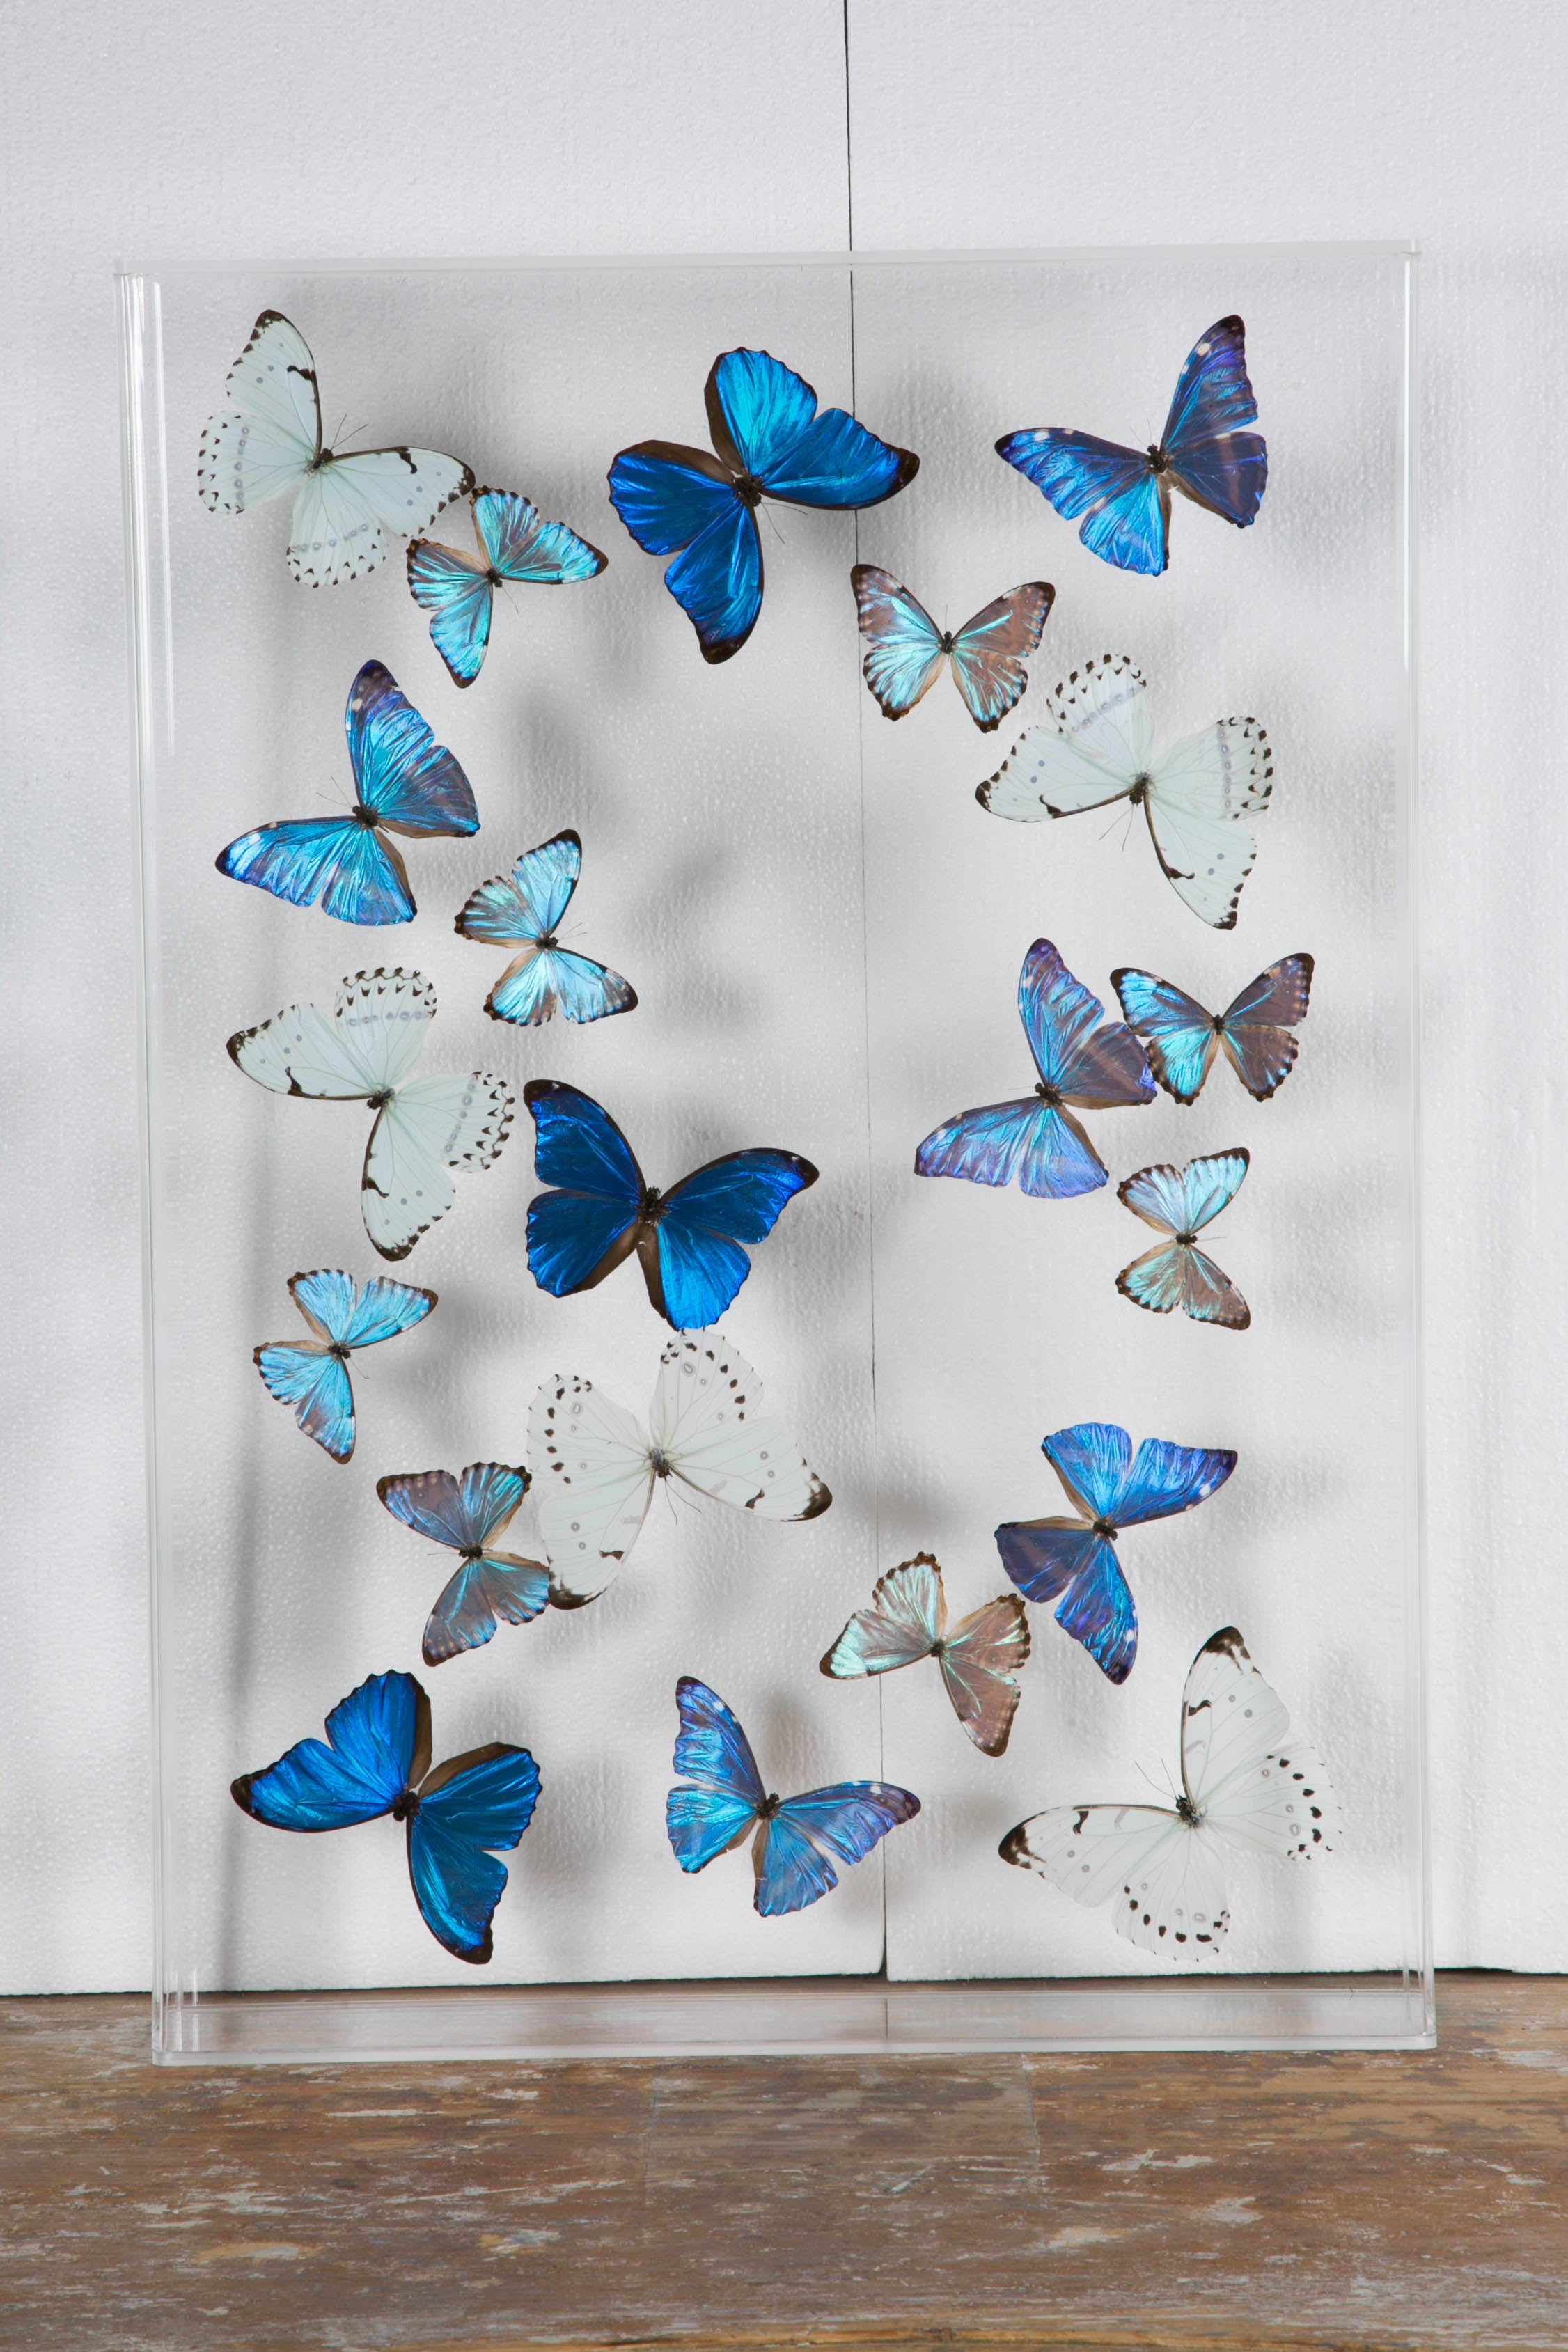 Flight of Morphos Butterflies in Lucite Case by Atelier L for Stéphane Olivier